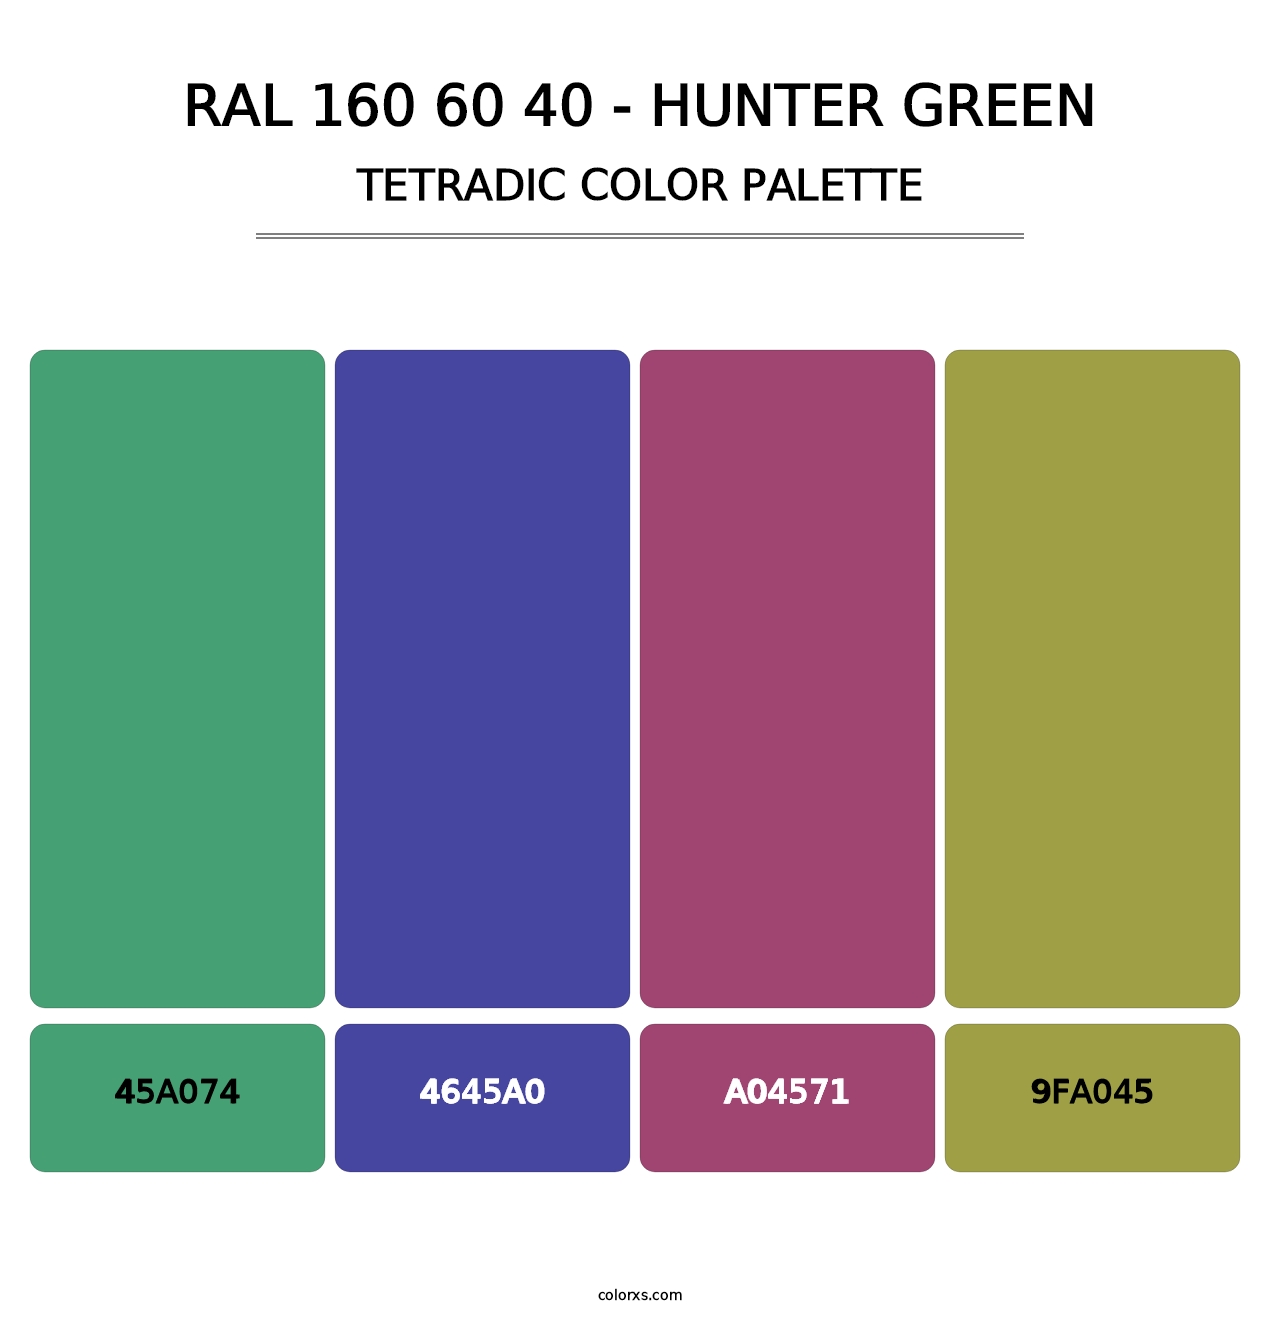 RAL 160 60 40 - Hunter Green - Tetradic Color Palette